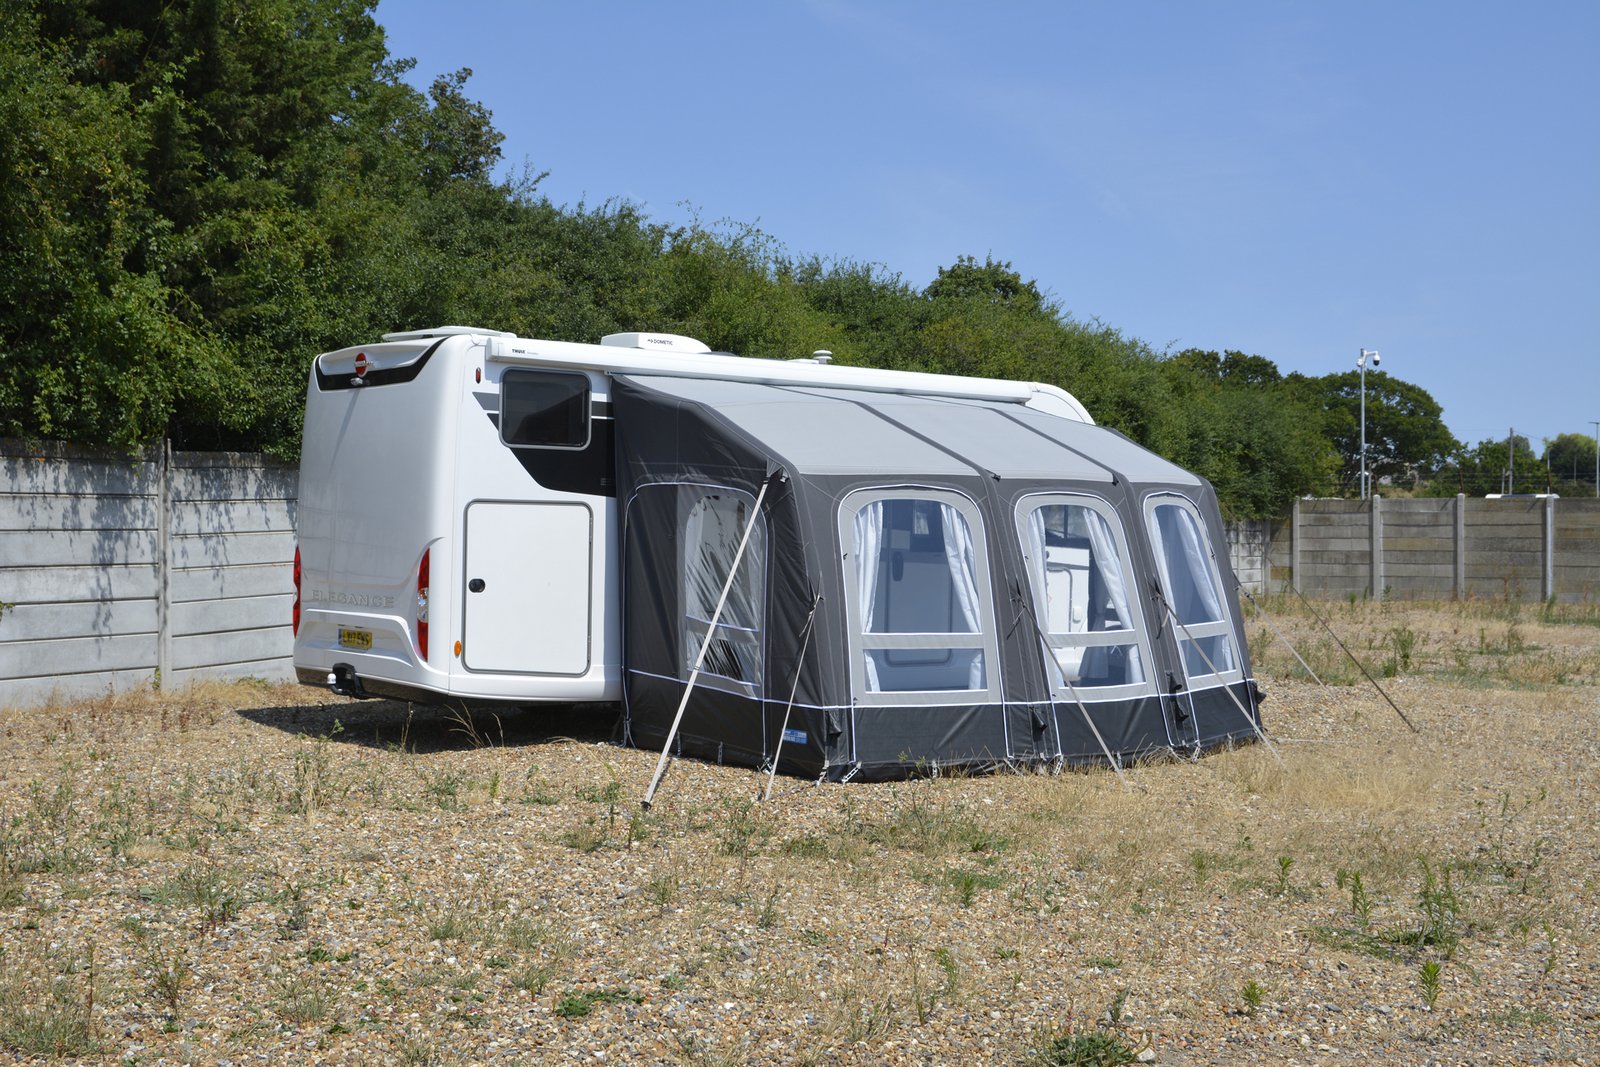 Mir camping палатка. Надувная палатка Dometic. Надувная палатка kampa. Мир кемпинг 2019. Кемпинговая надувная палатка kampa Dometic Wittering 6 Air.